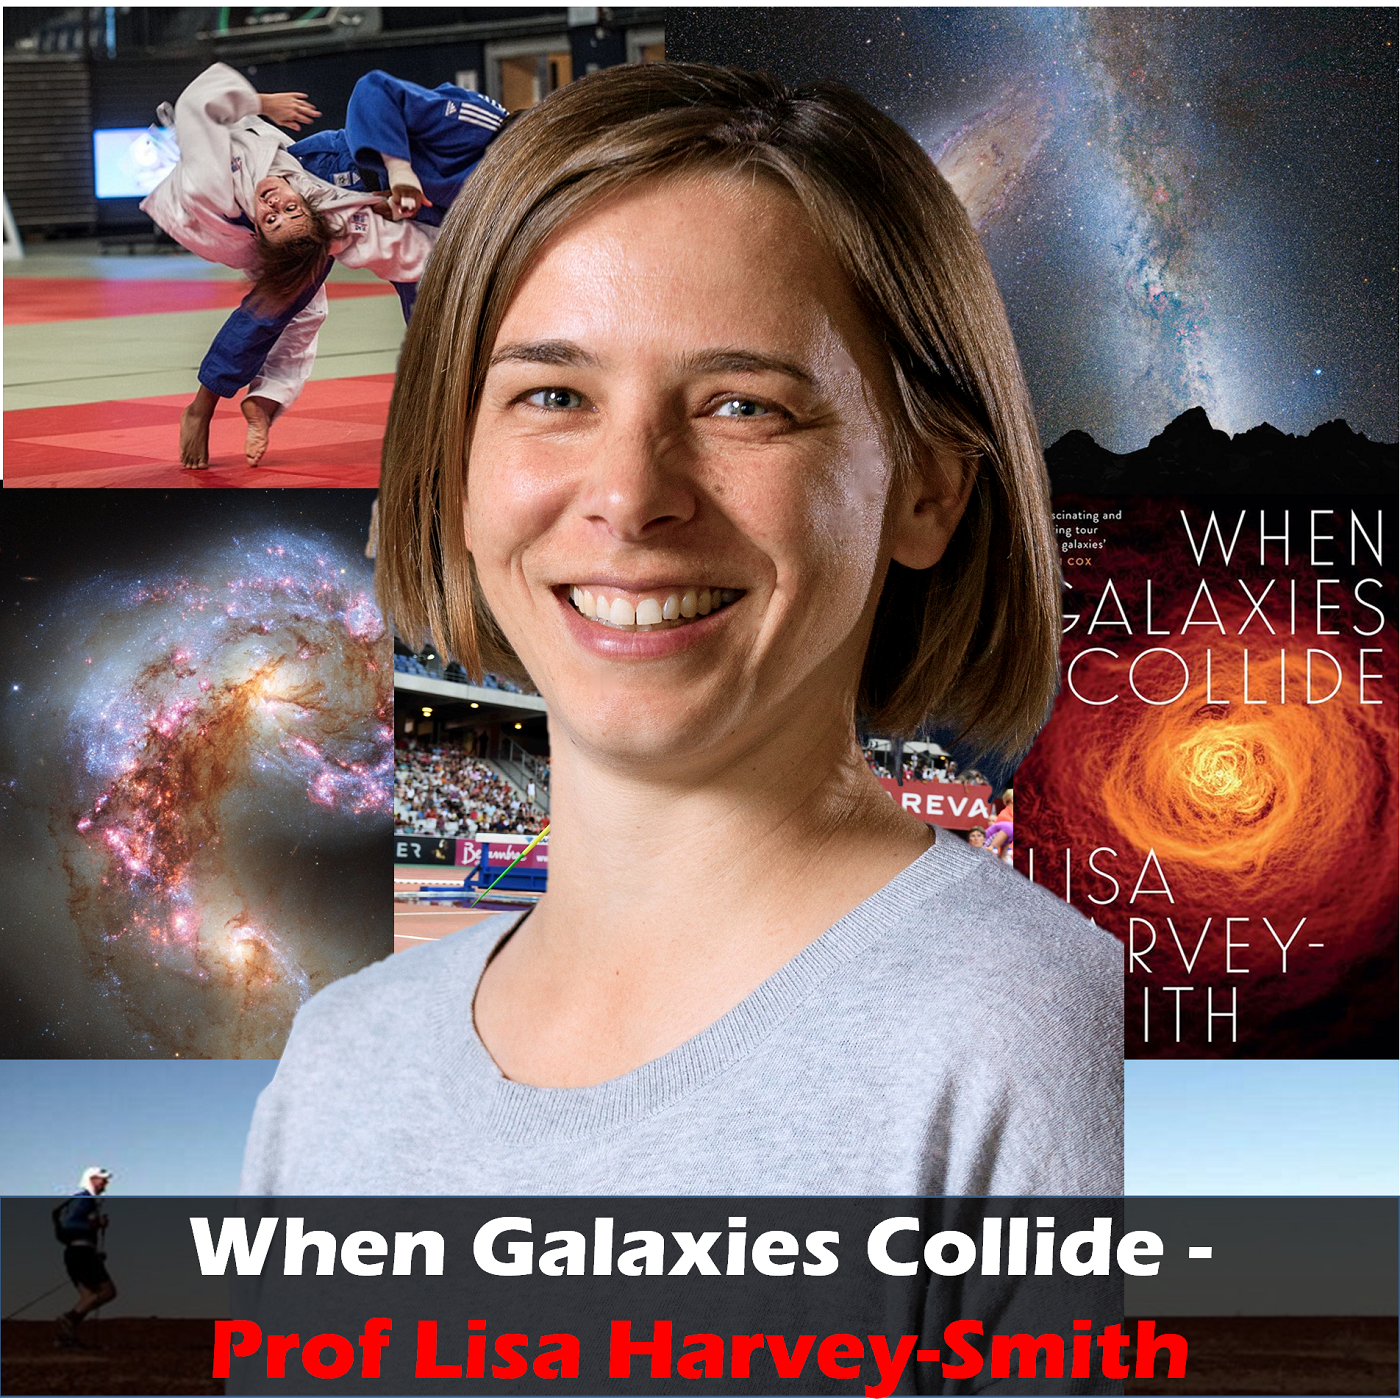 4.2 When Galaxies Collide - Prof Lisa Harvey-Smith